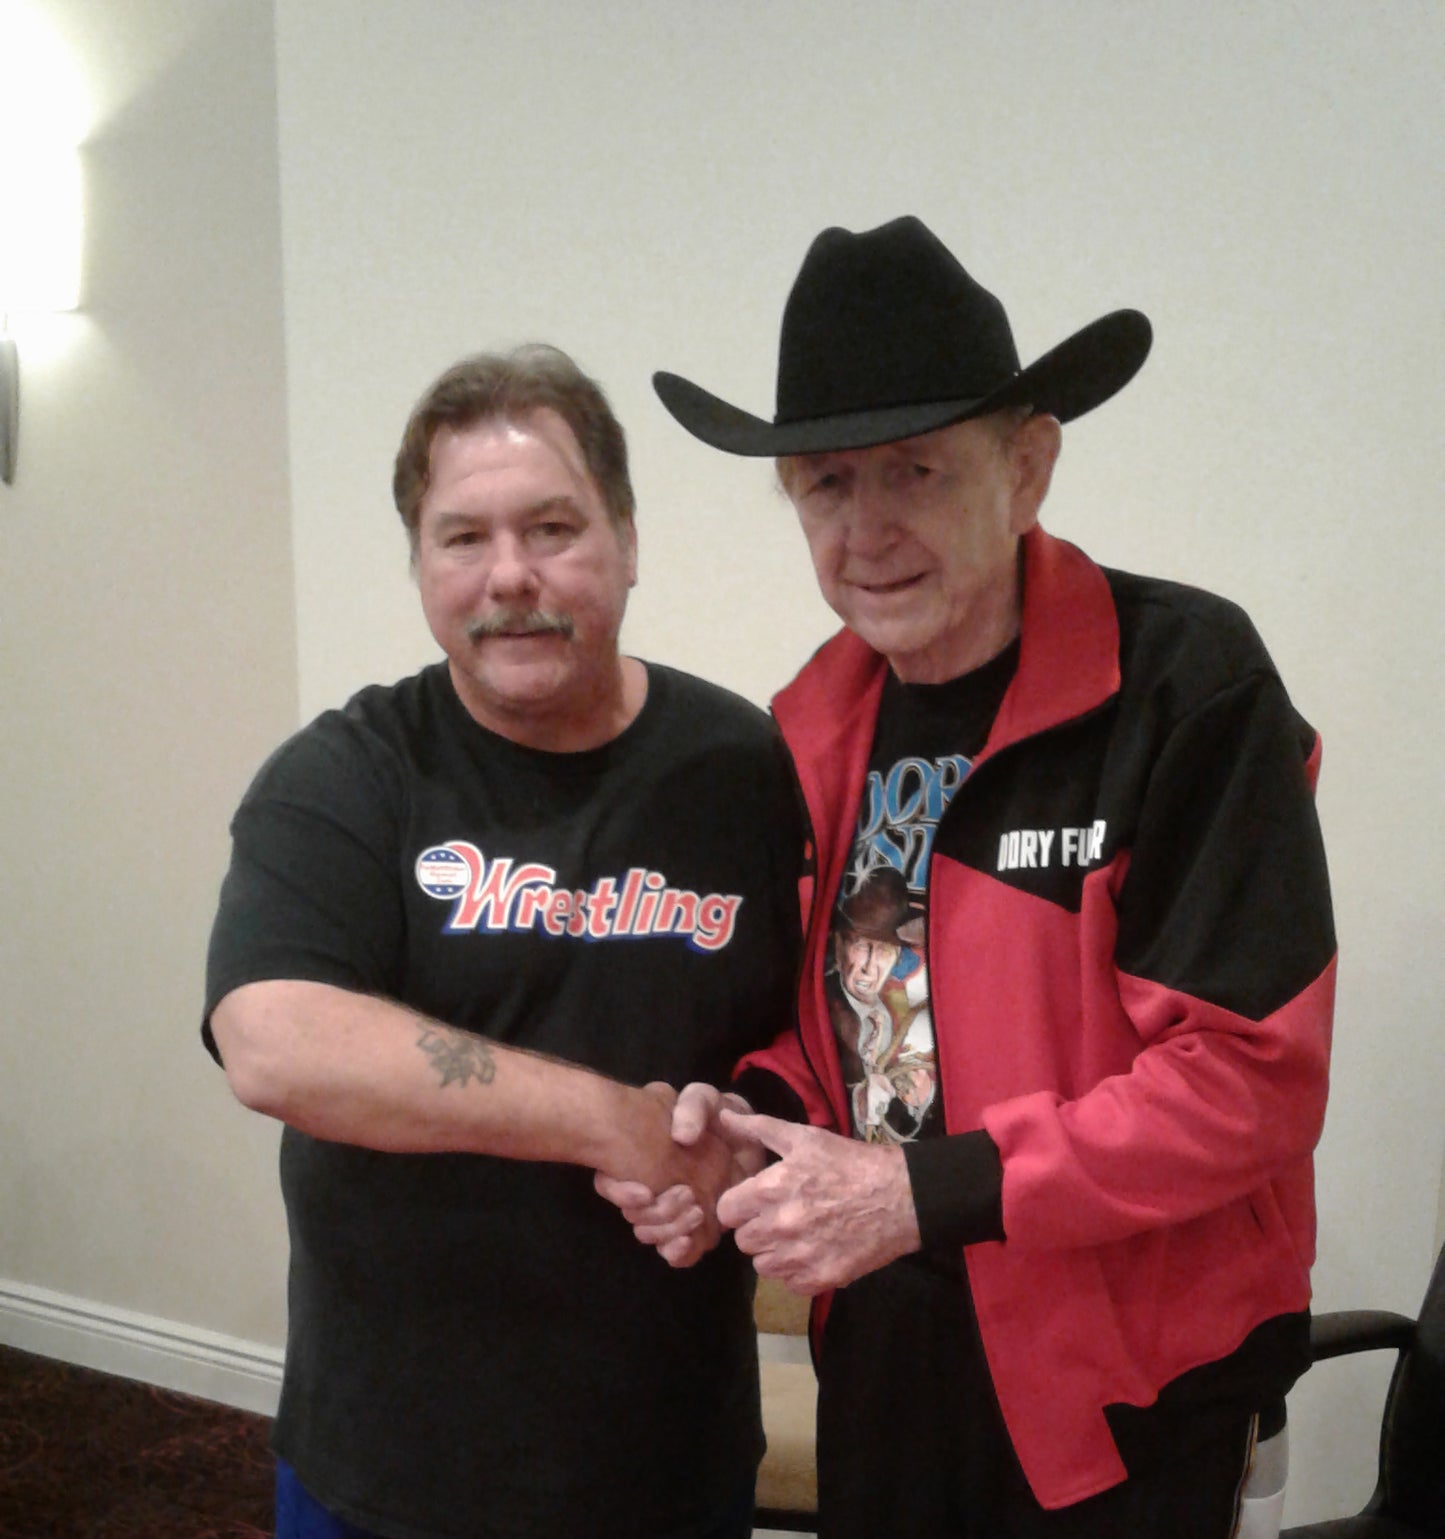 M177 Dory Funk Jr. vs Terry Funk Autographed Wrestling Photo w/COA